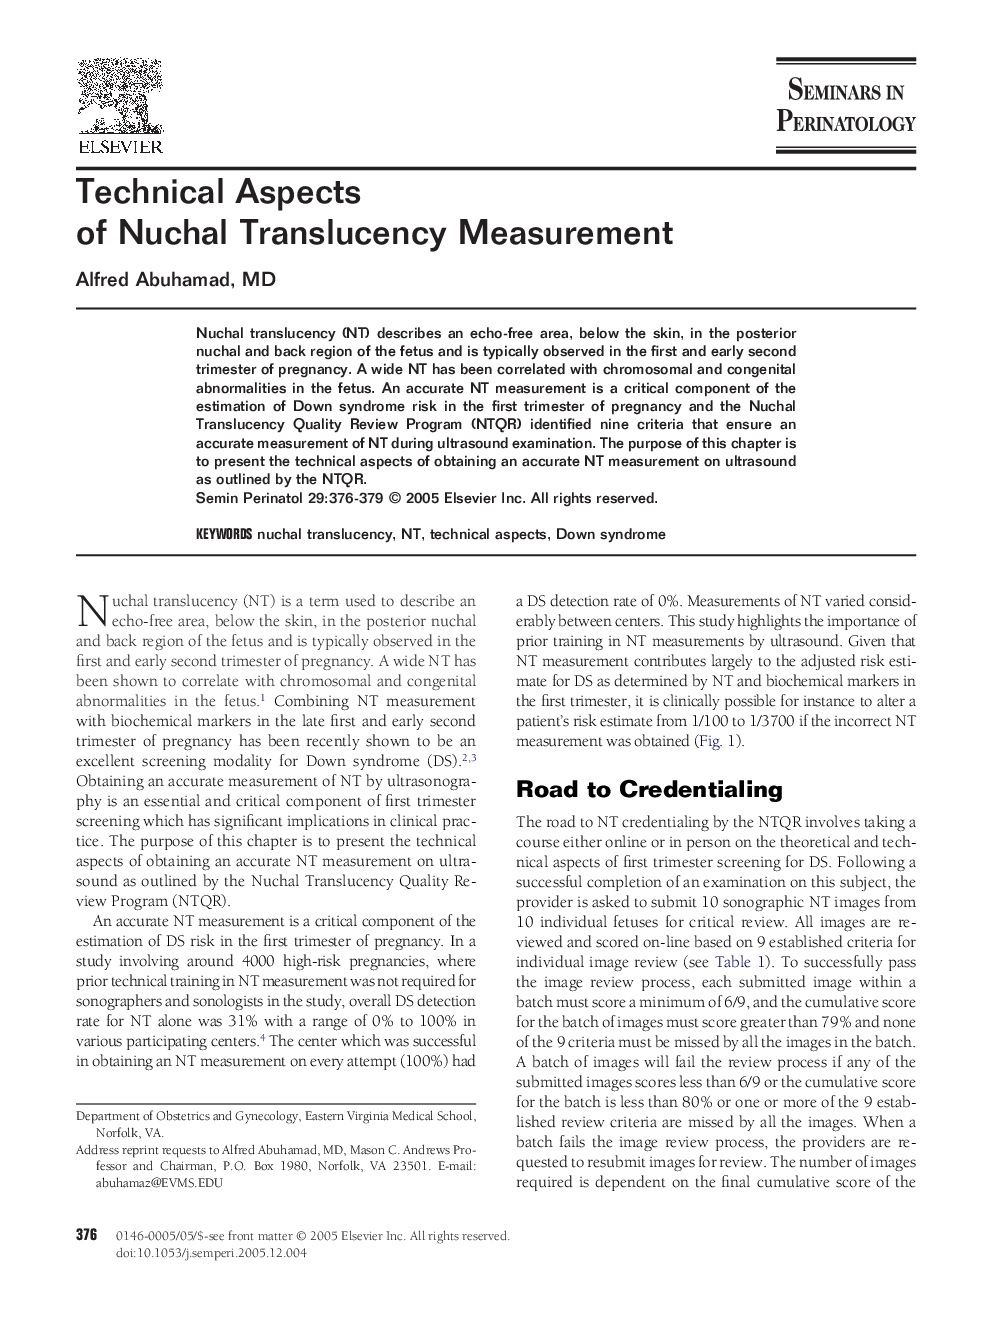 Technical Aspects of Nuchal Translucency Measurement